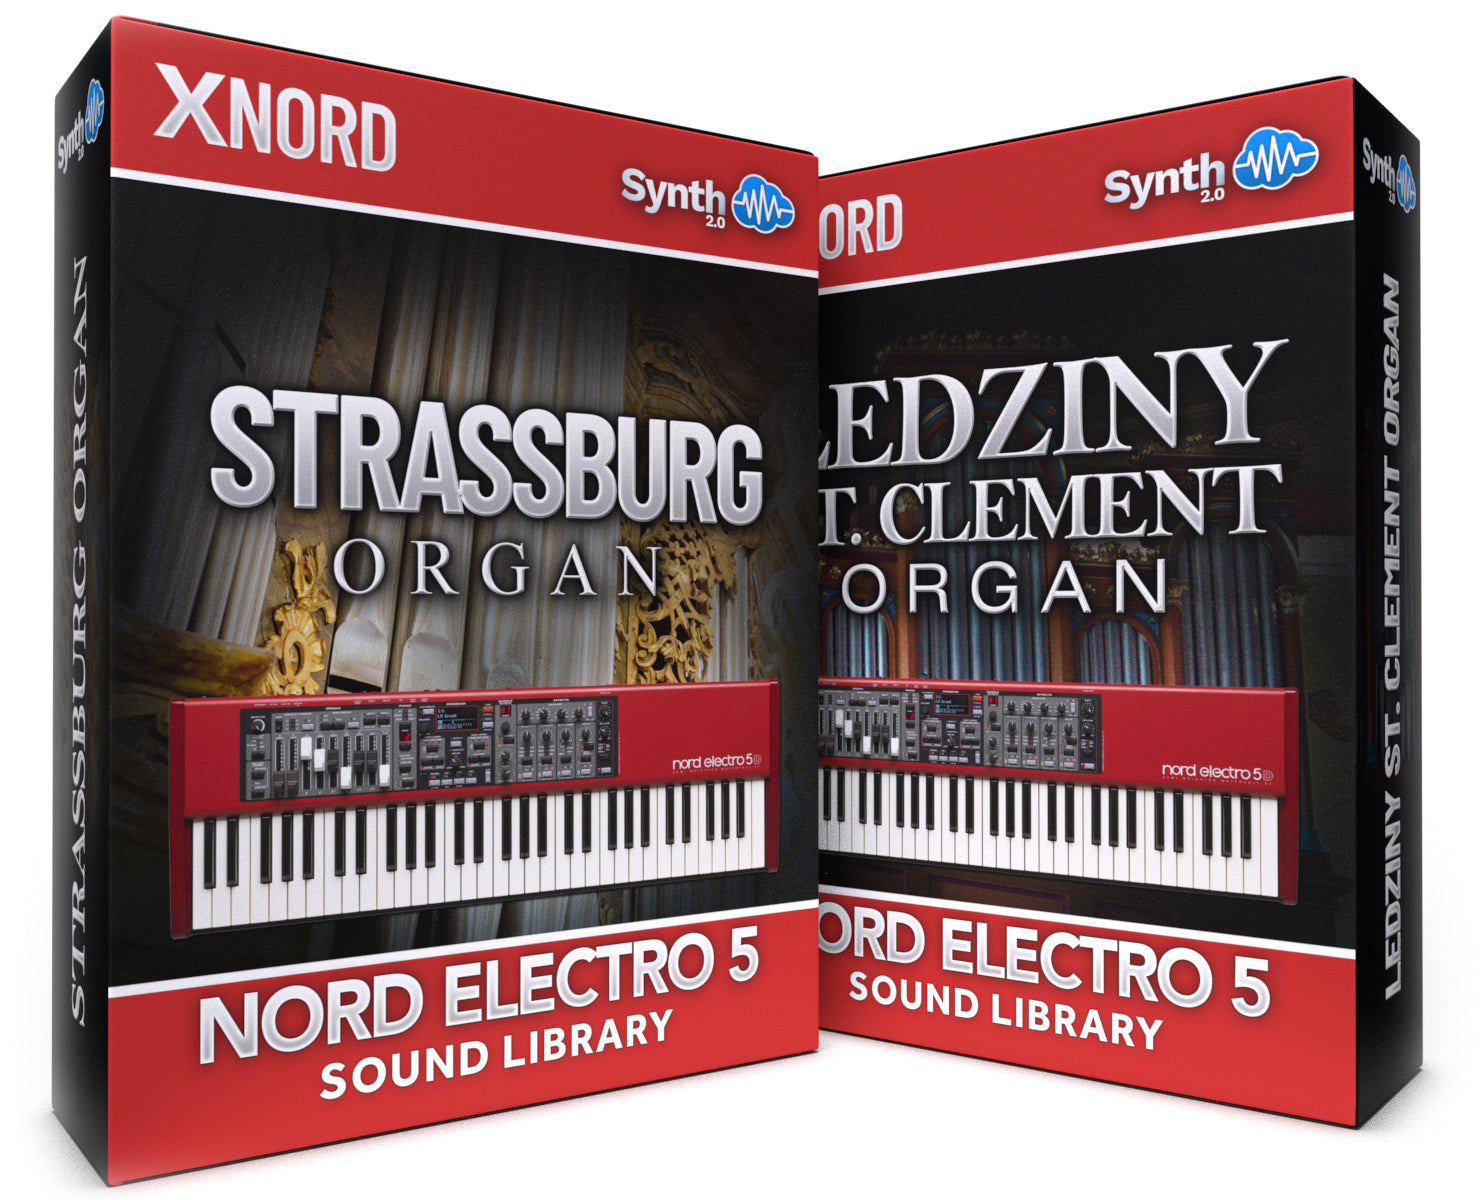 RCL009 - ( Bundle ) - Strassburg Organ + Ledziny, St. Clement Organ - Nord Electro 5